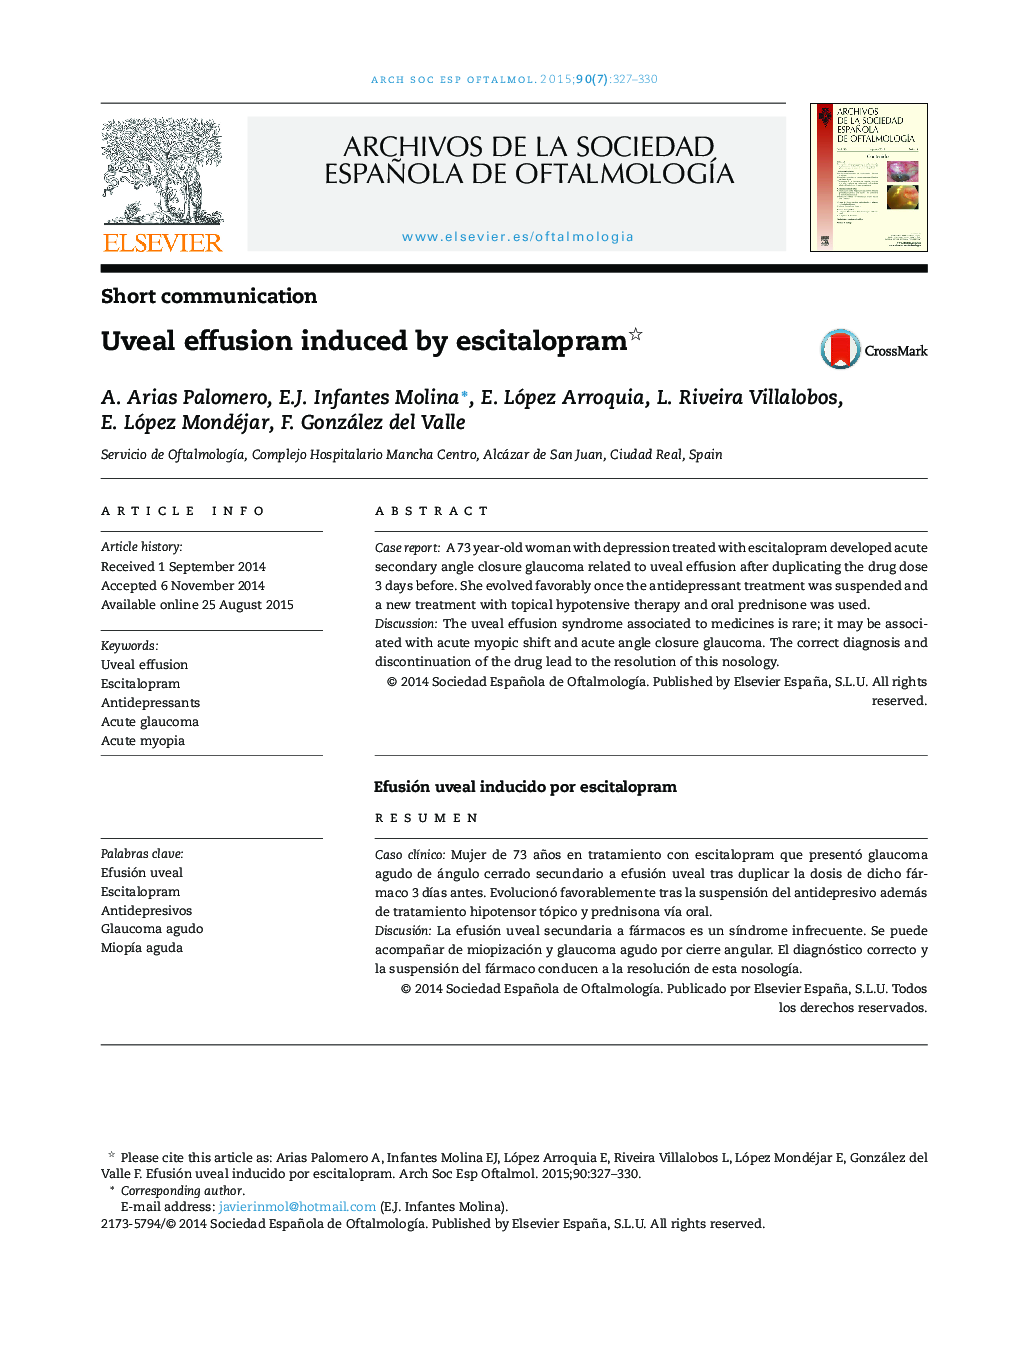 Uveal effusion induced by escitalopram 